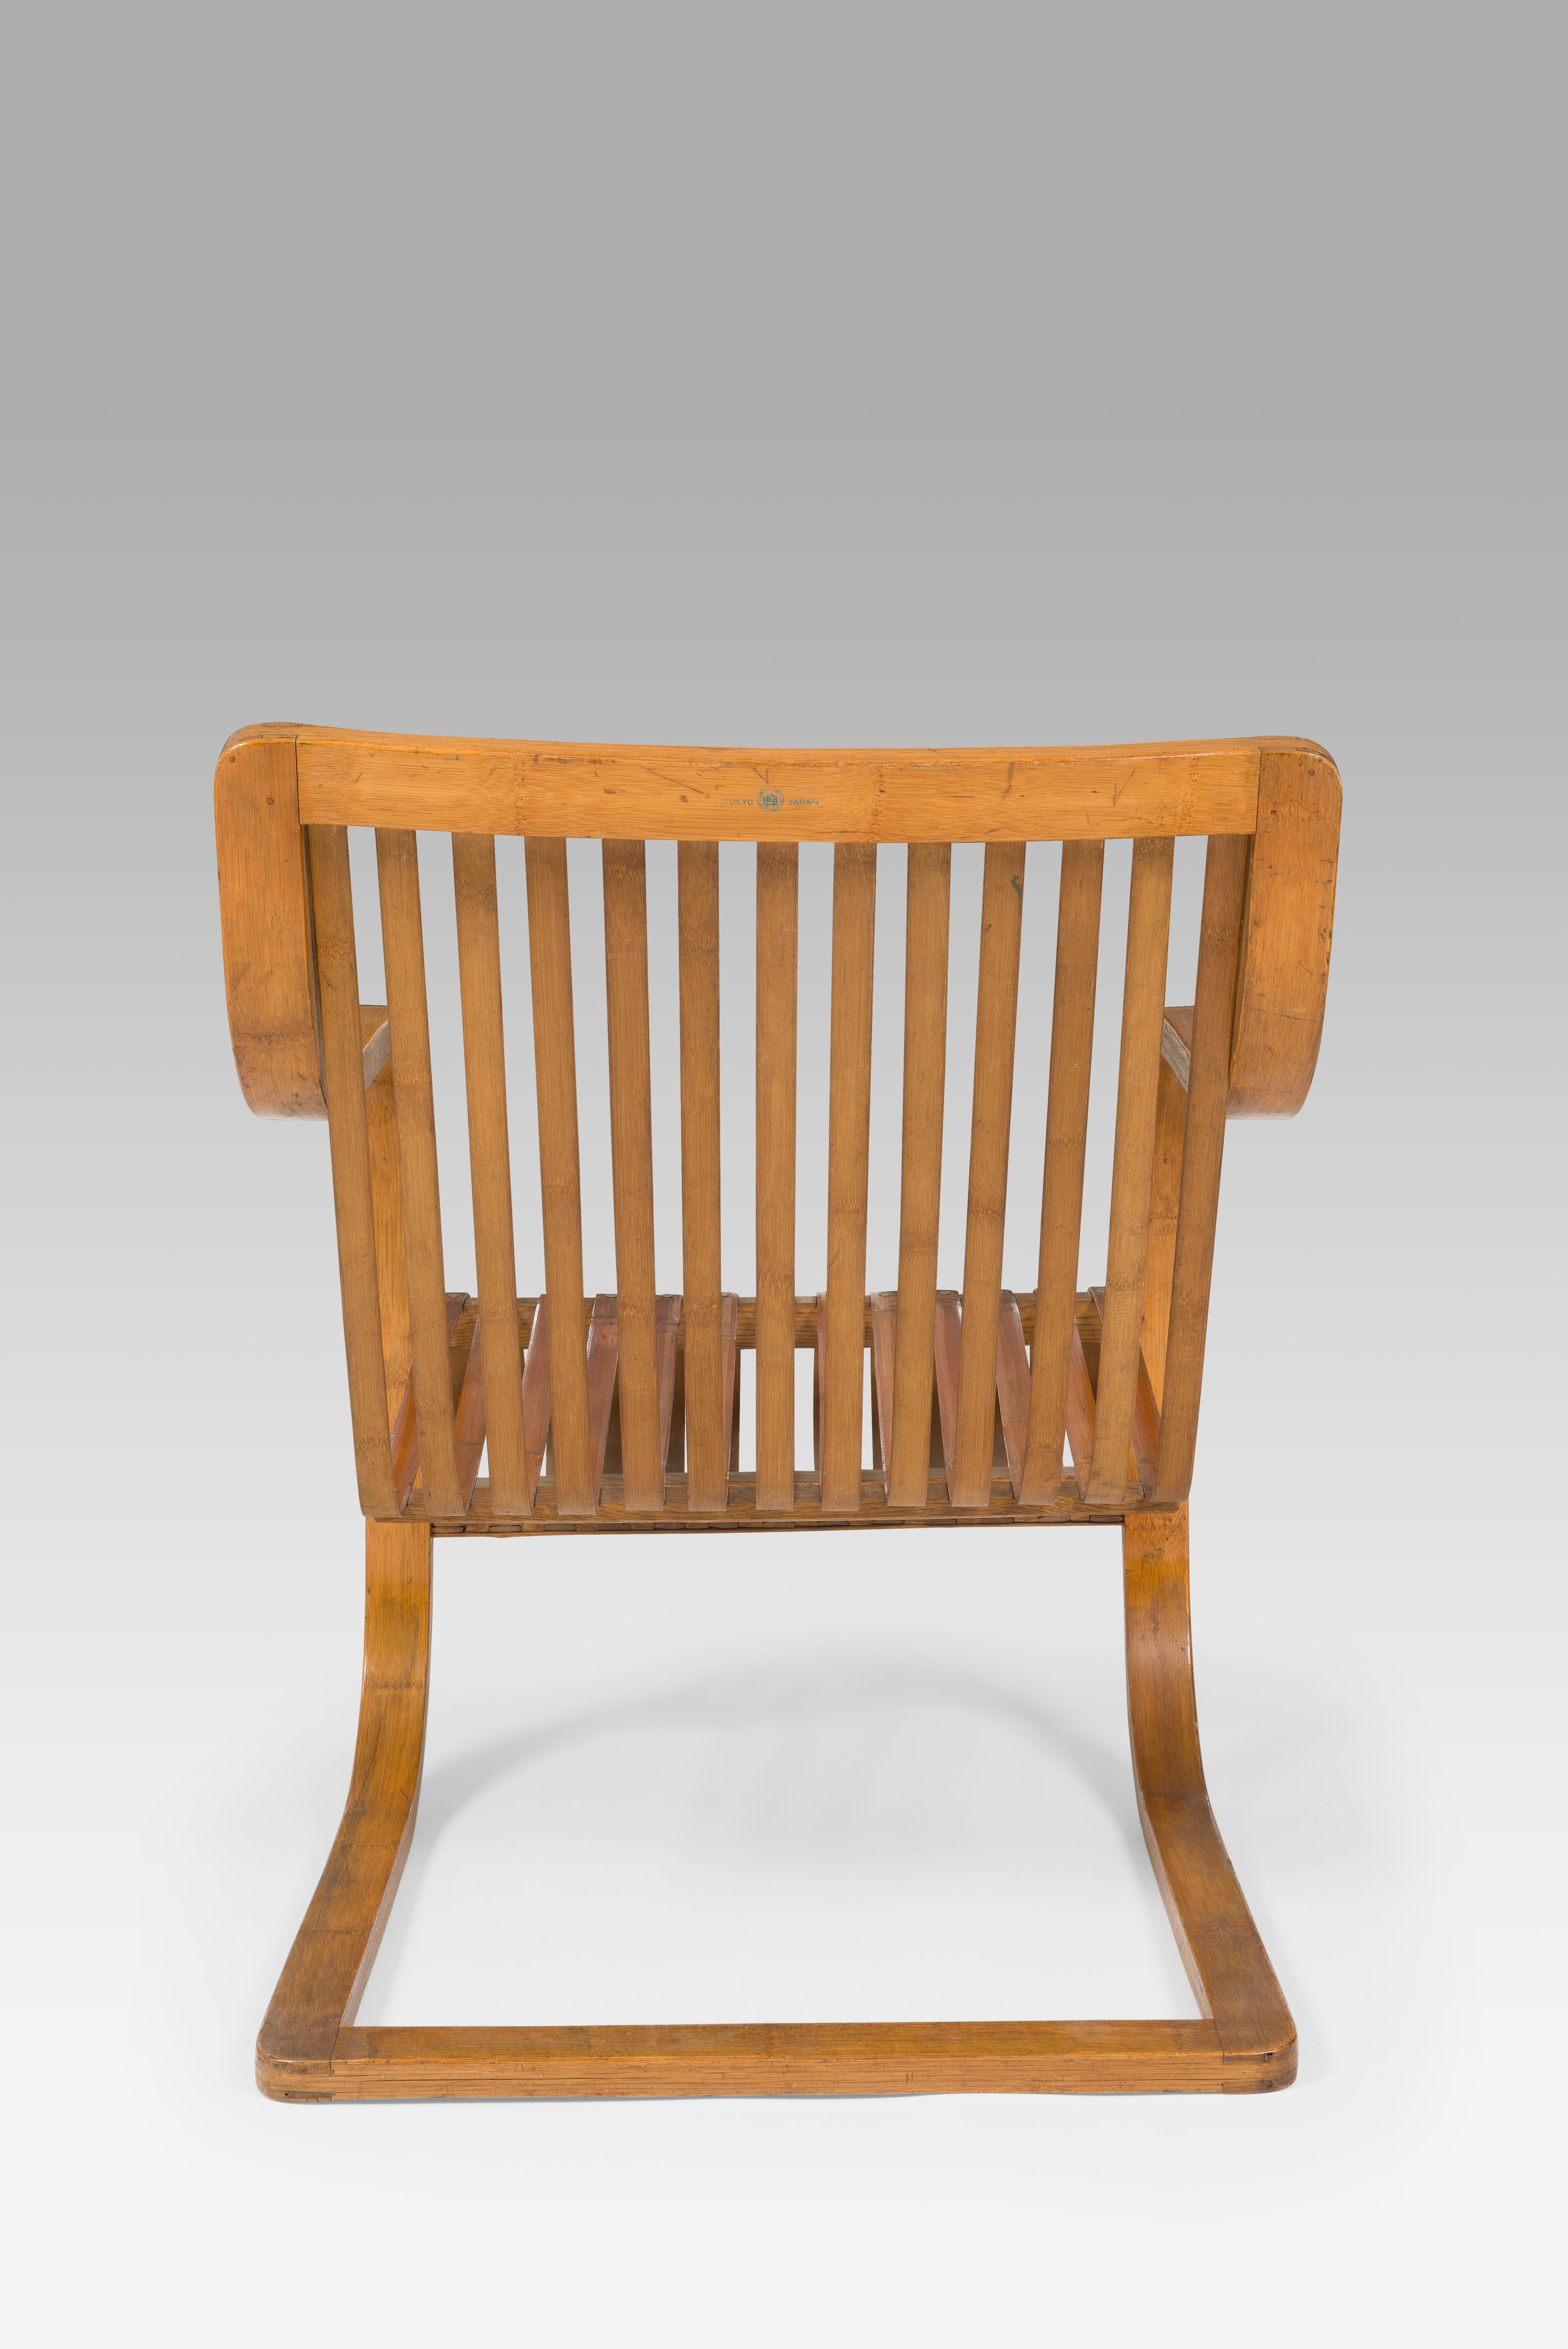 Art Deco Bamboo Rocking Chair by Ubunji Kidokoro For Sale